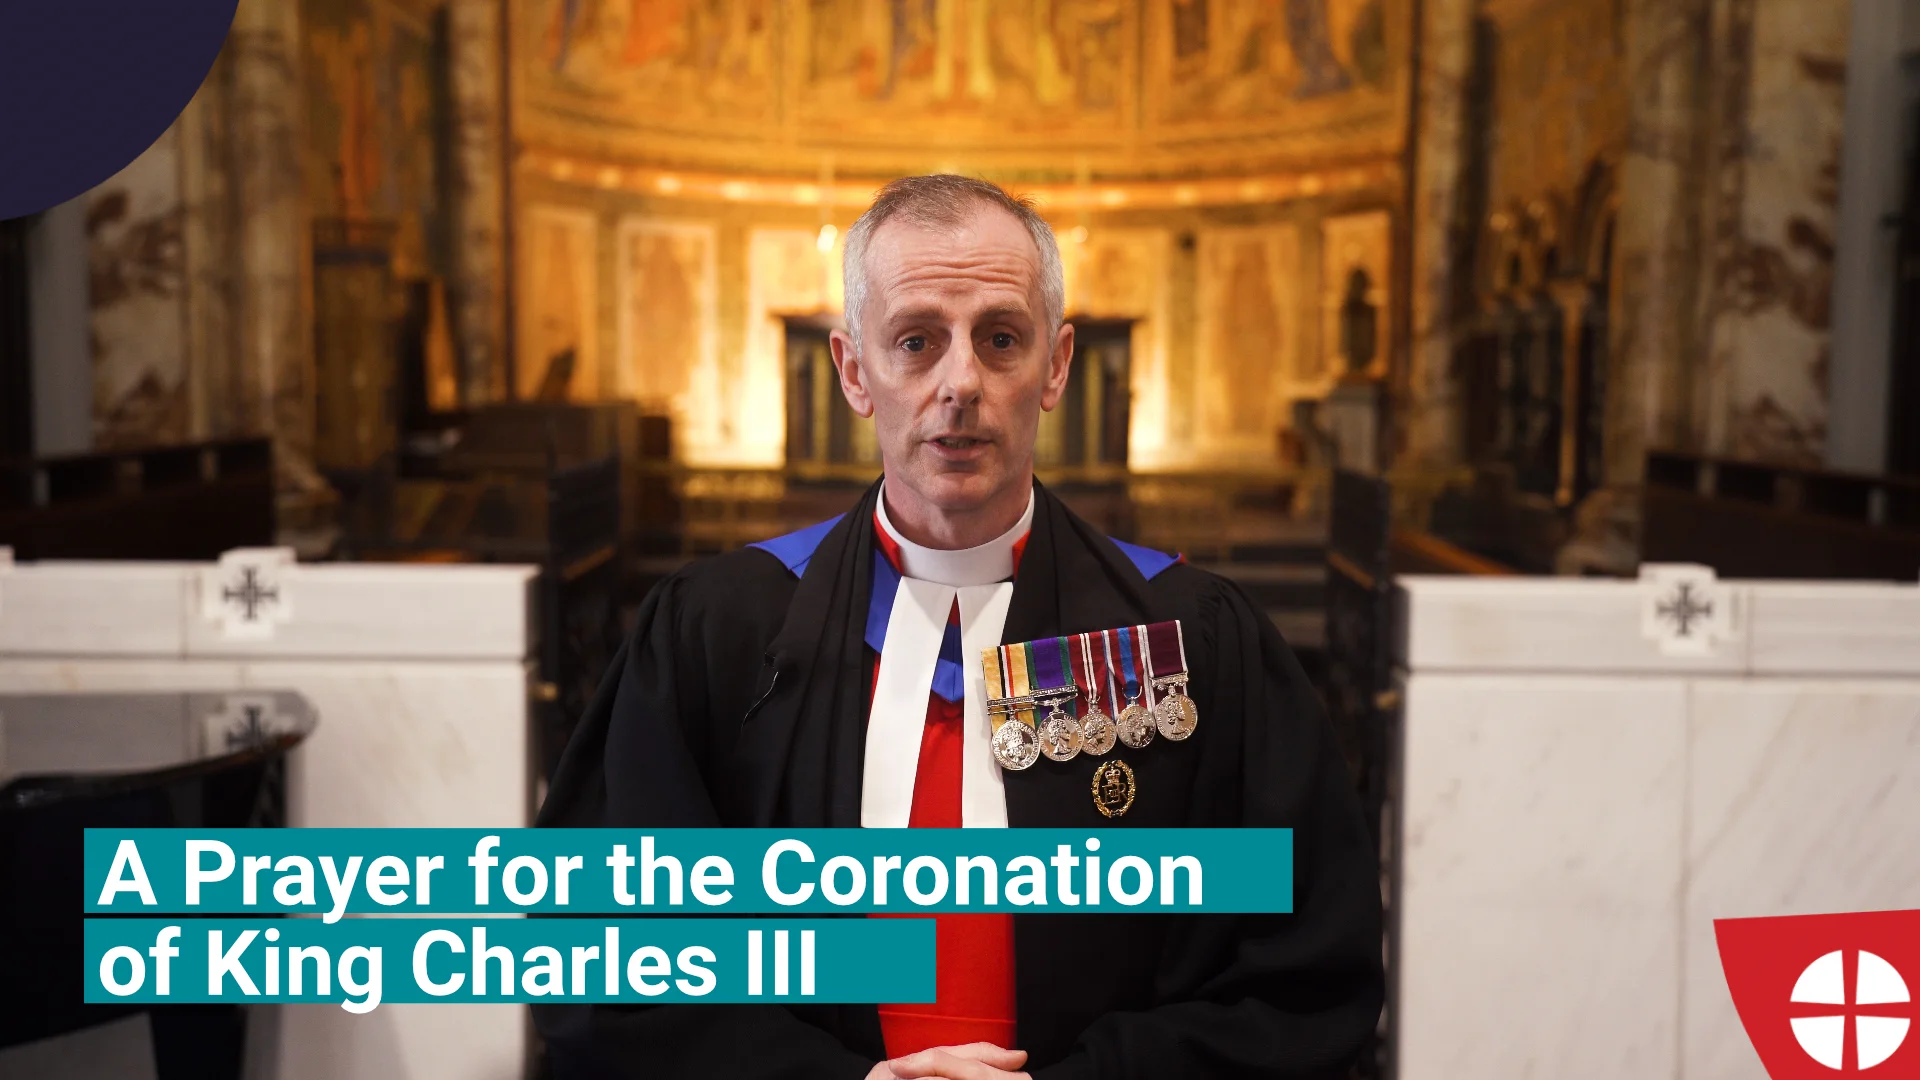 Prayers for the Coronation of King Charles III